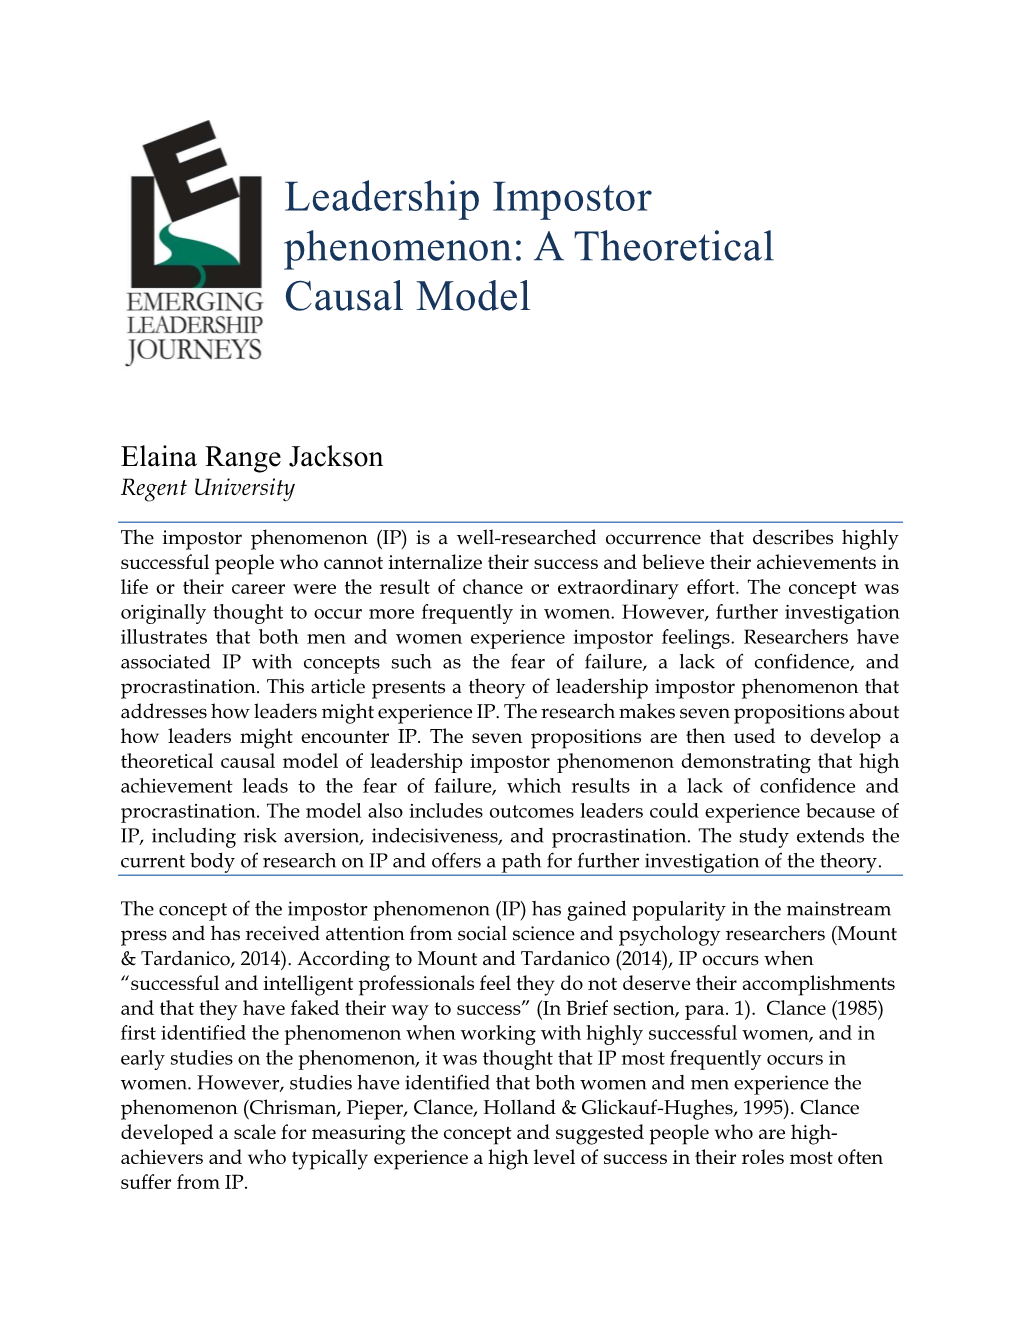 Leadership Impostor Phenomenon: a Theoretical Causal Model